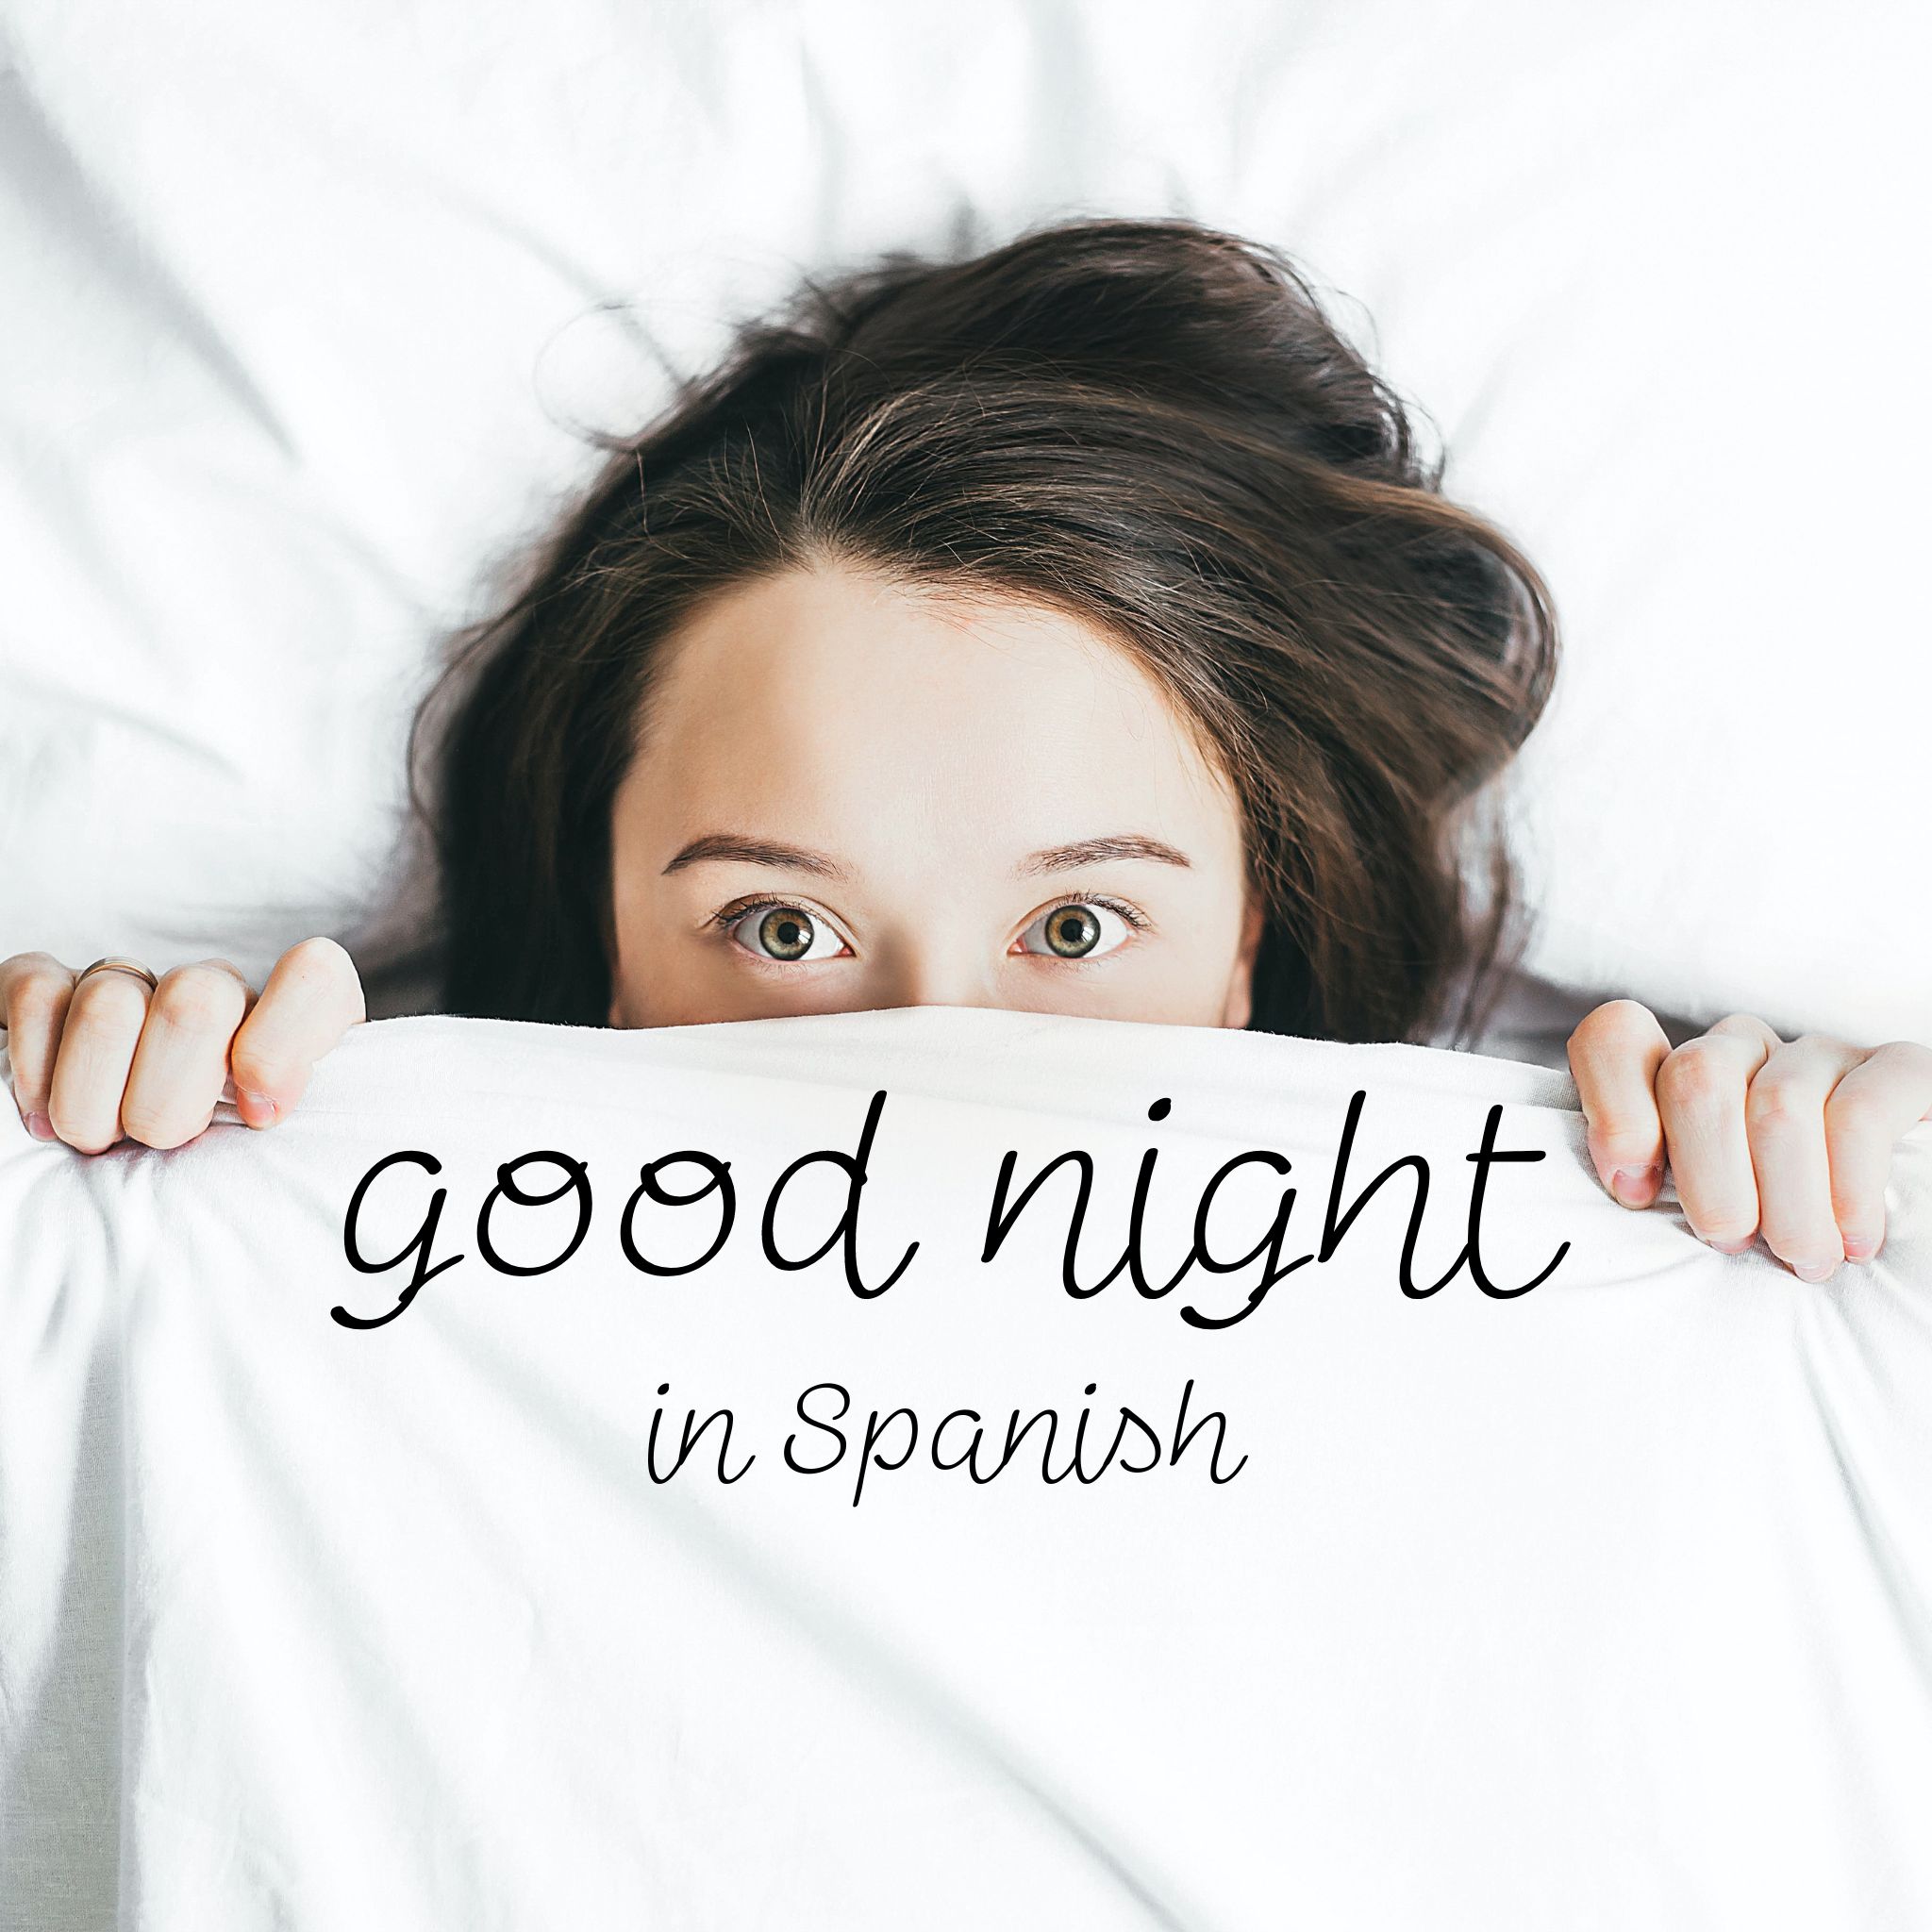 i do my homework at night in spanish